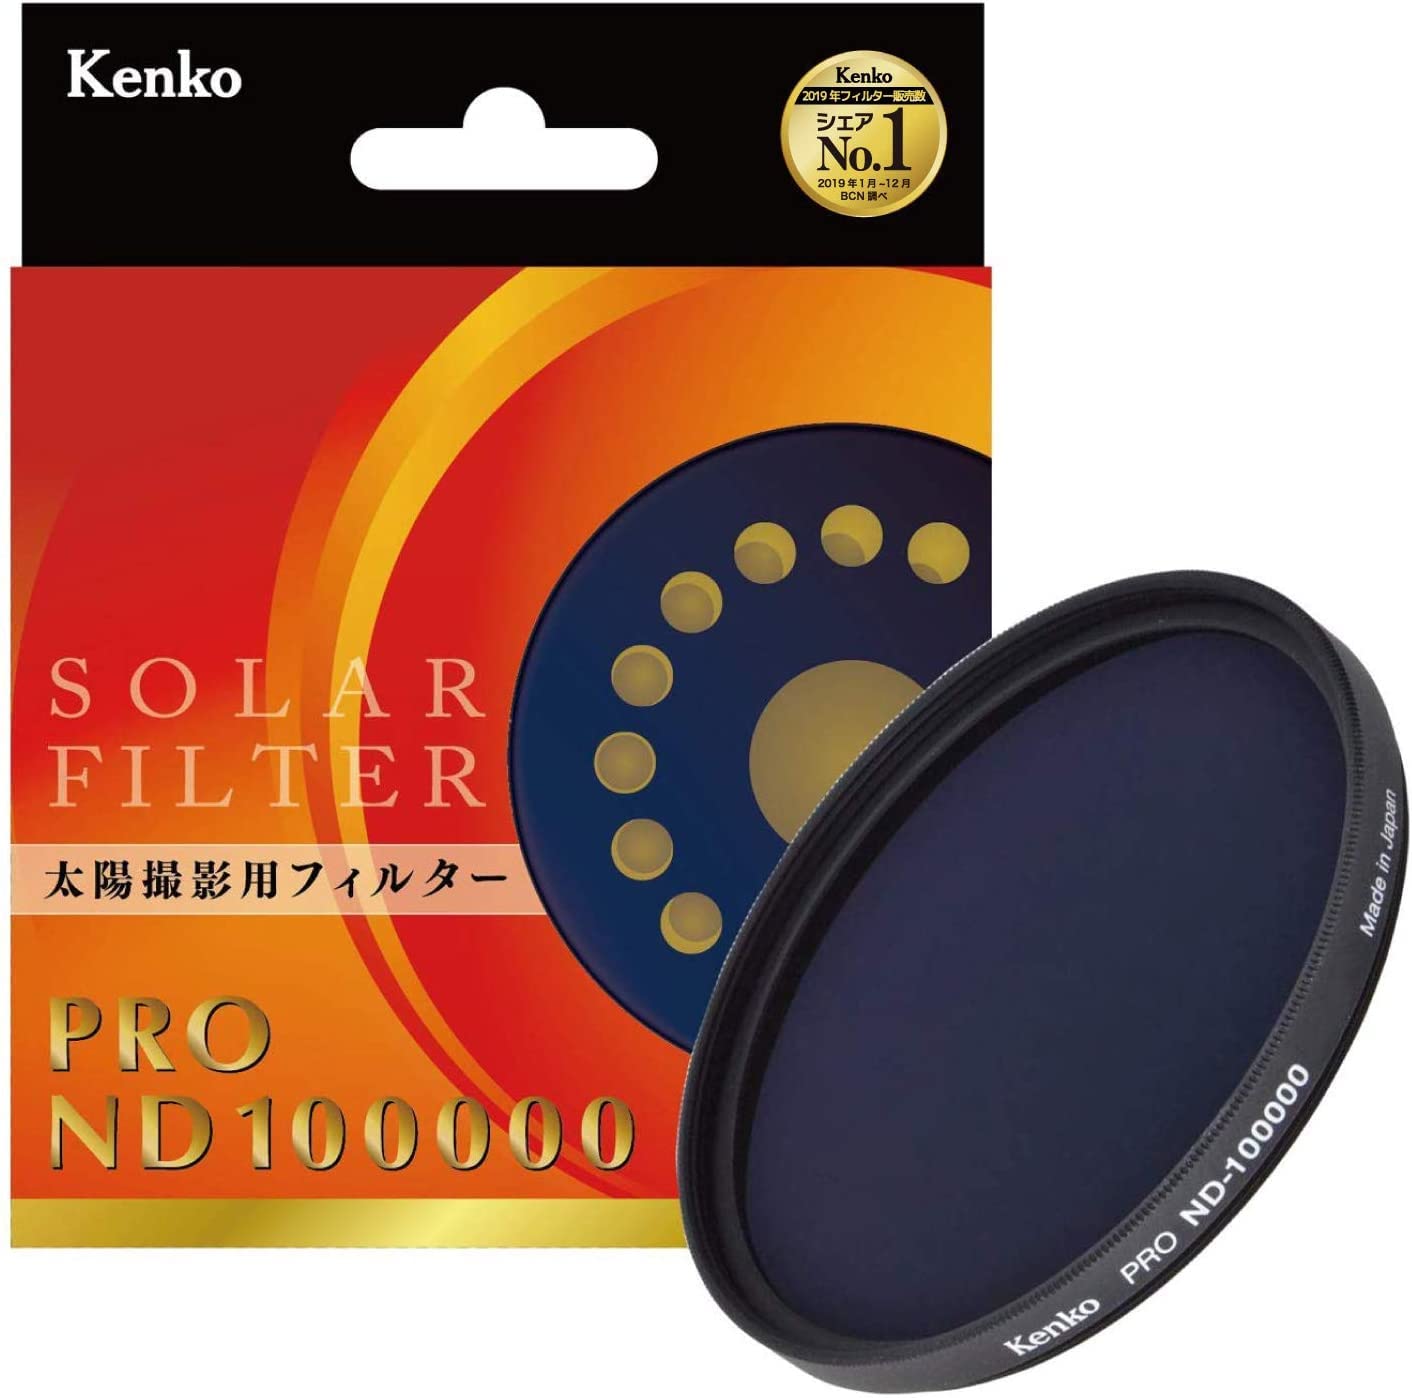 Kenko NDフィルター 82mm PRO ND100000 日食撮影用 182499